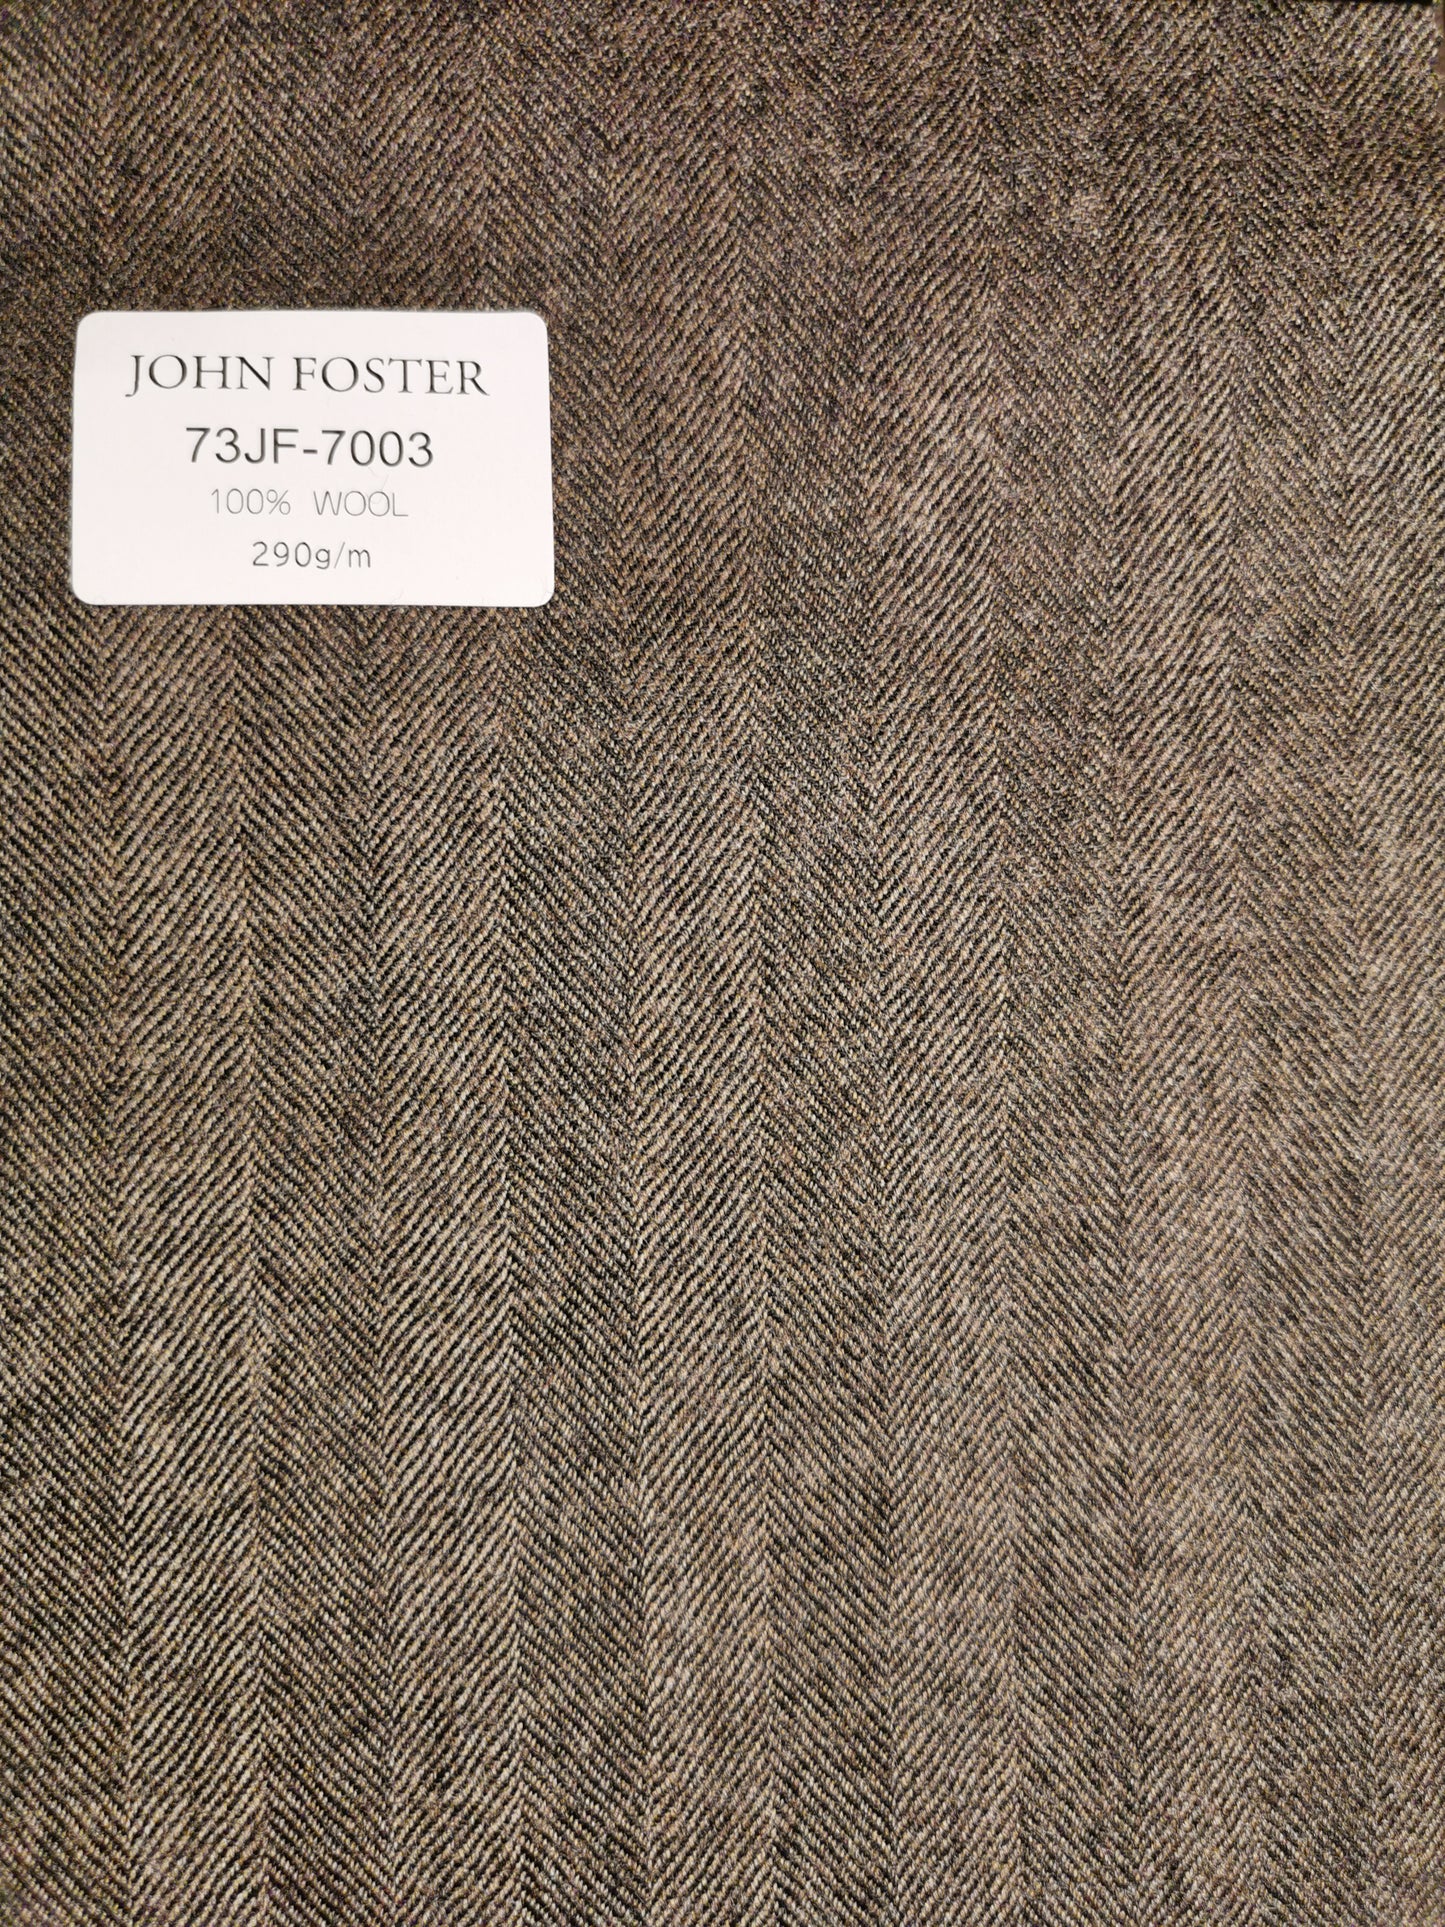 Brand : John Foster Textile ID : 73JF-7003